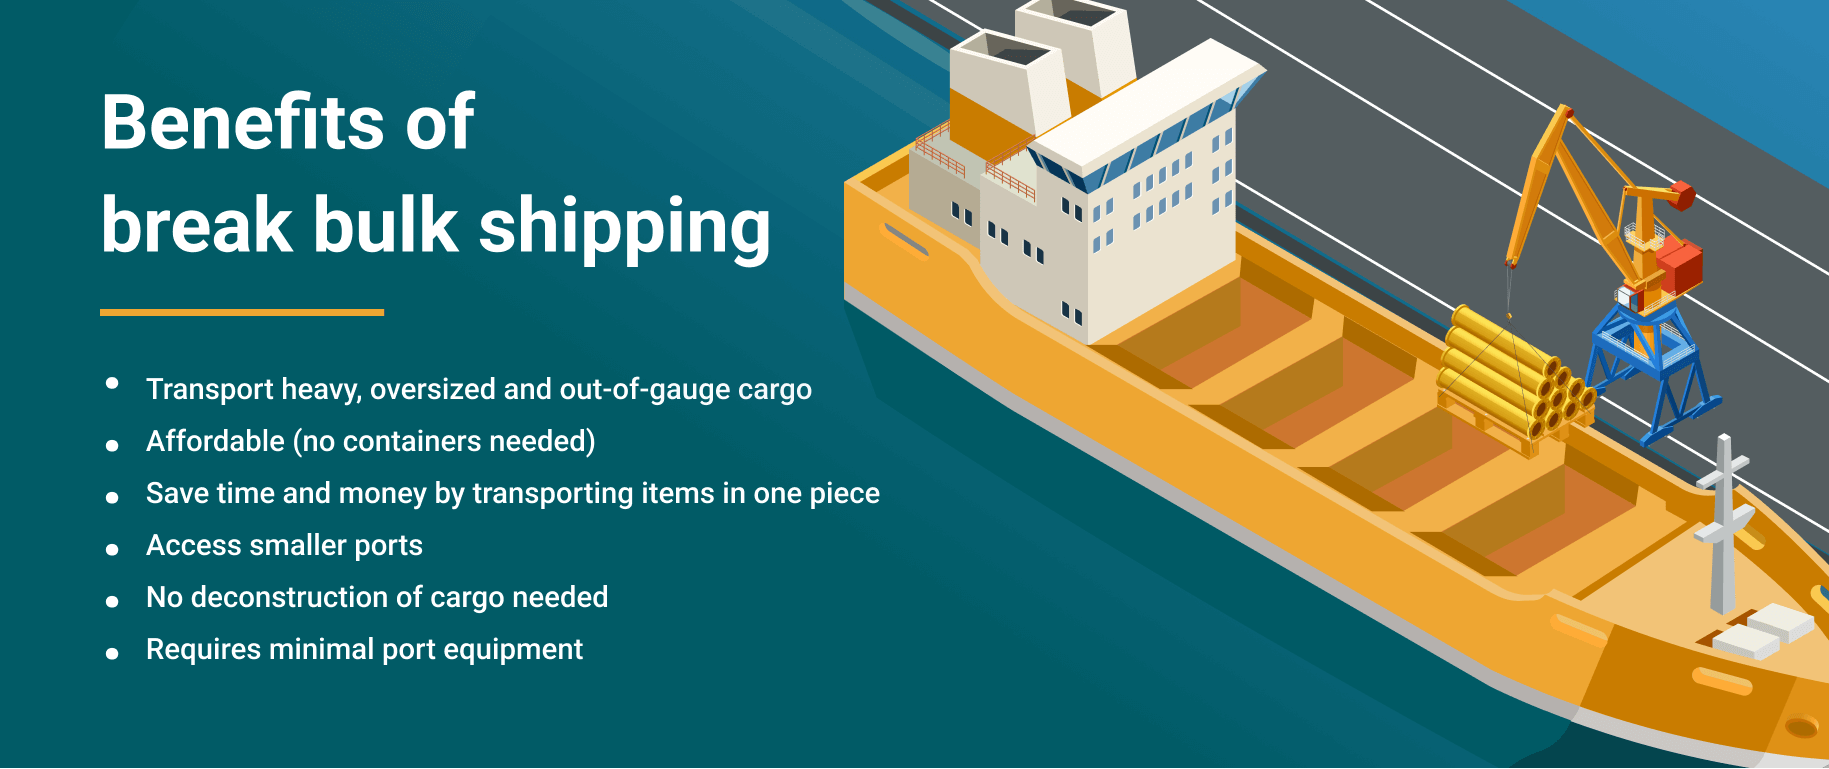 Benefits of break bulk shipping